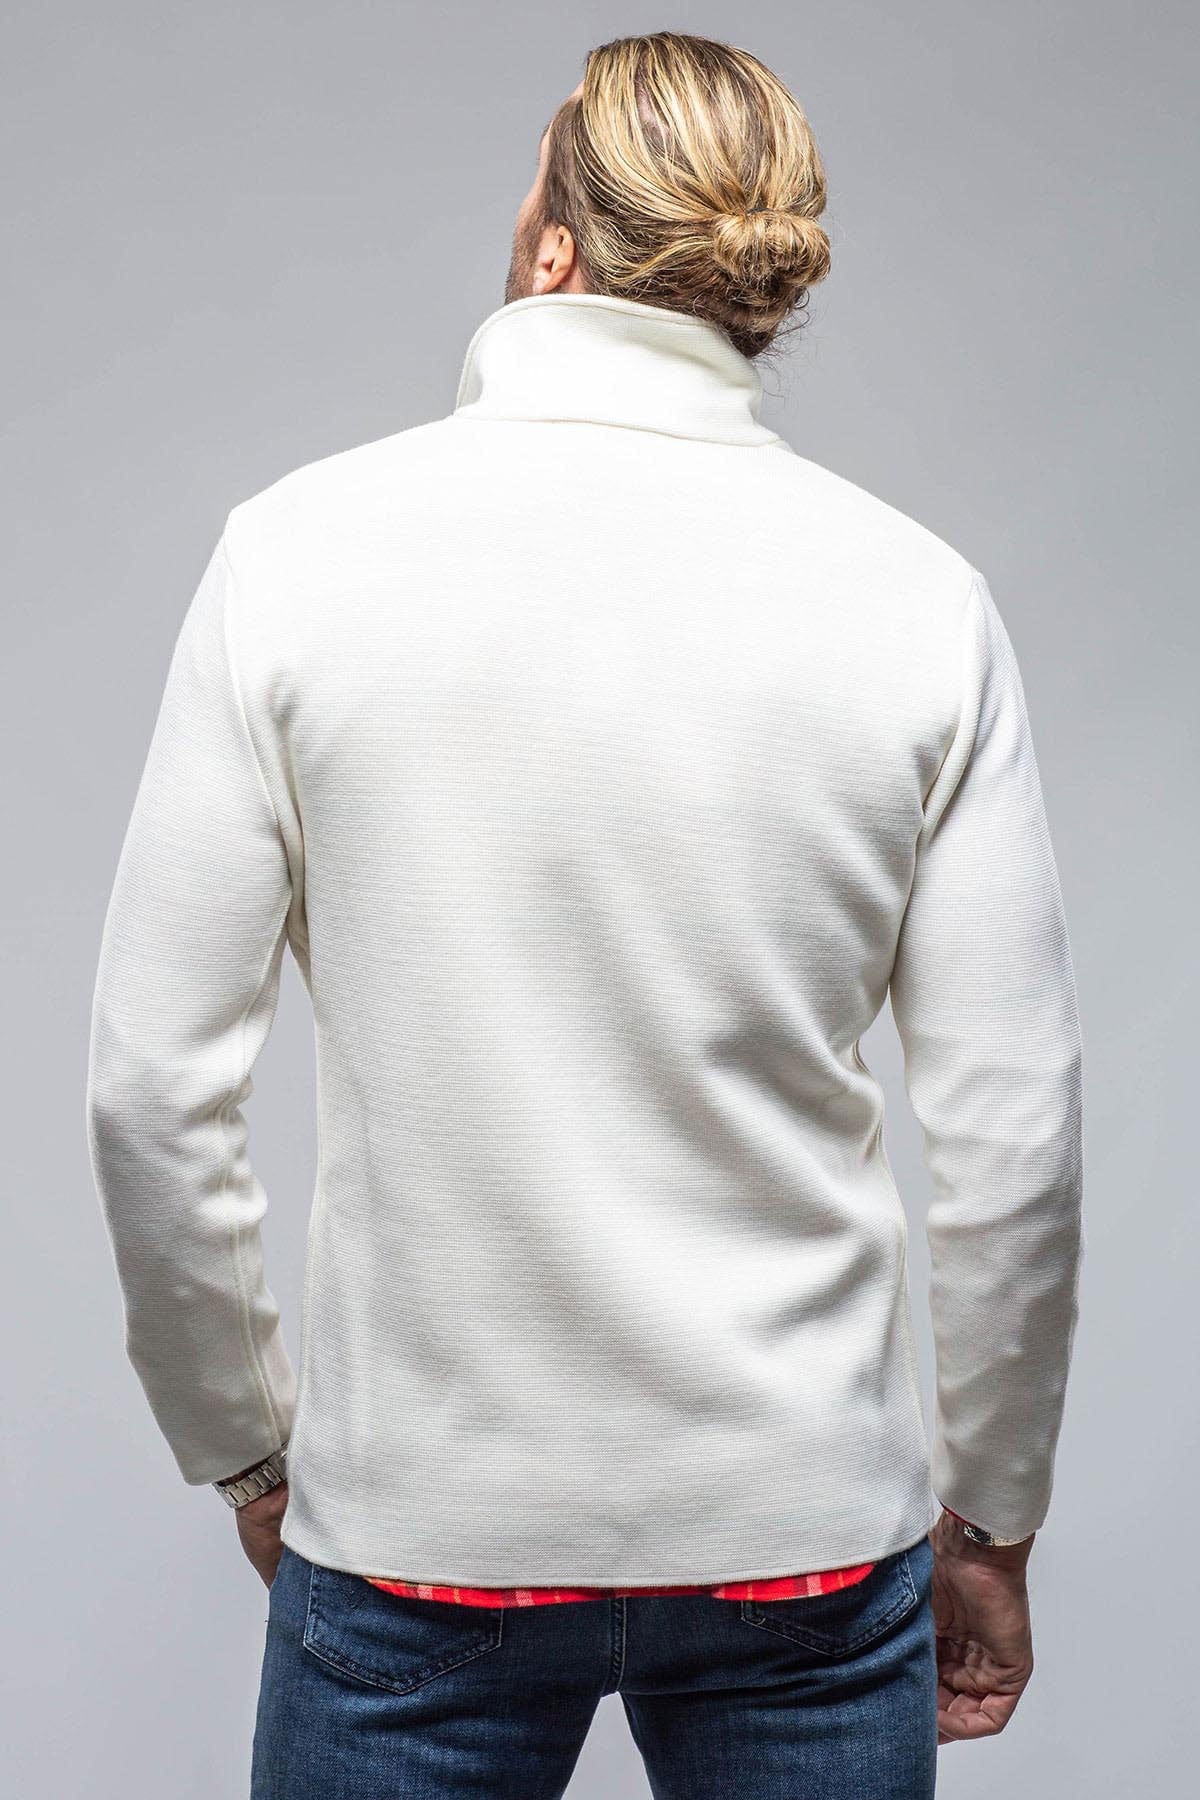 Revuelto Merino Sweater Jacket in White - AXEL'S